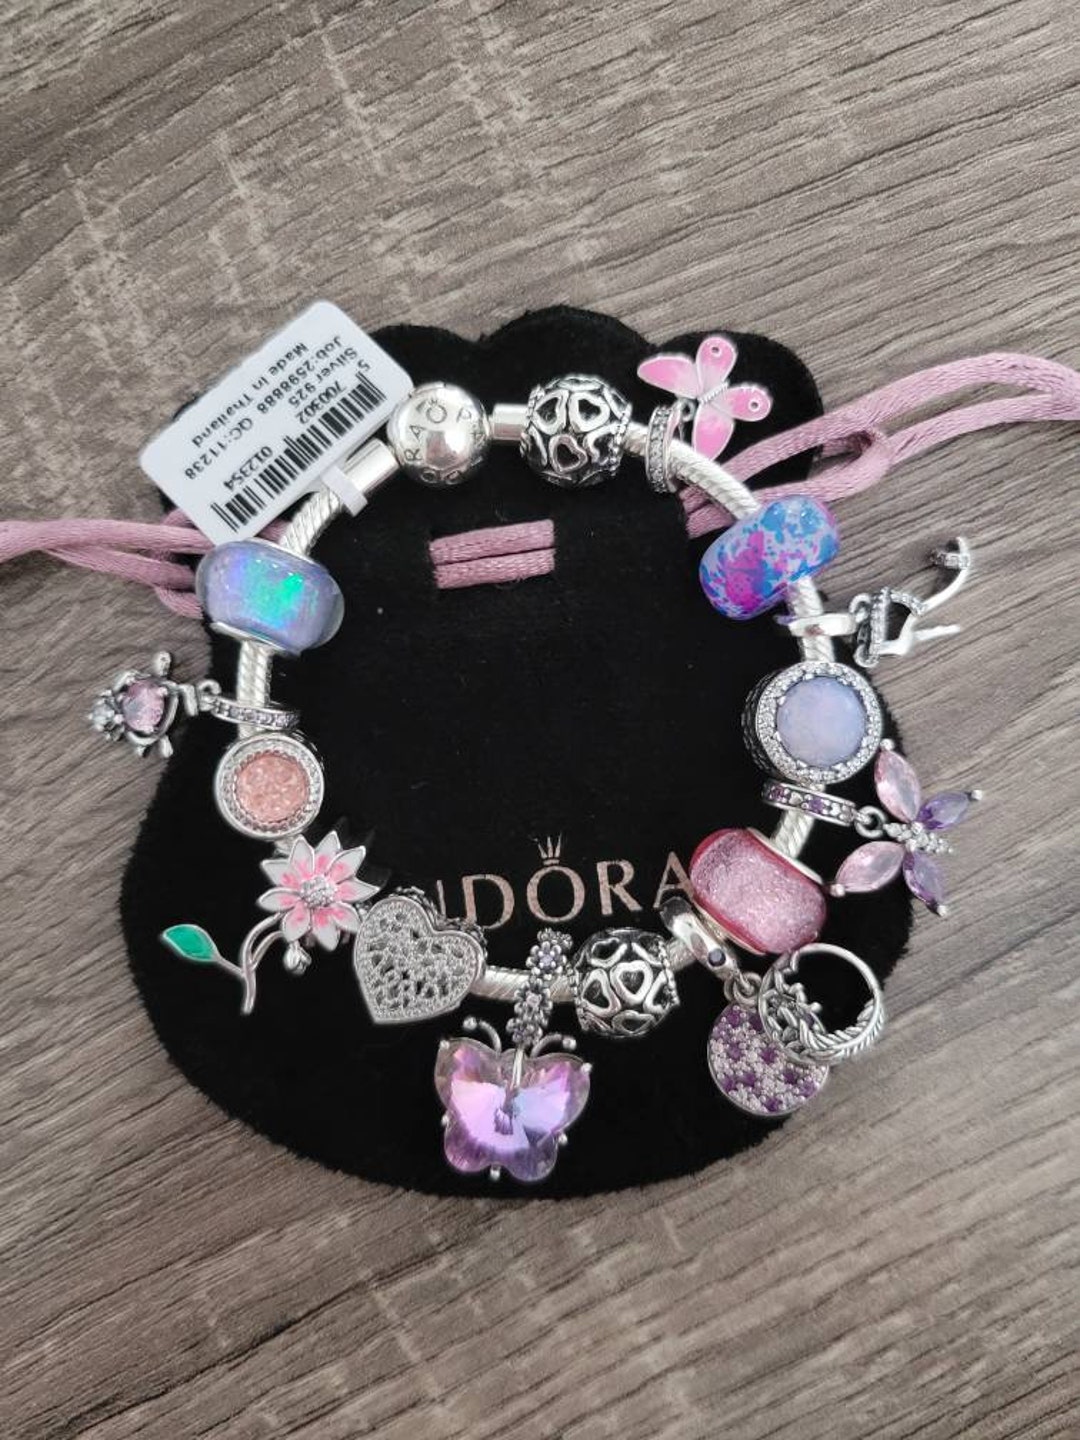 Pandora armband met bedels in roze paars en turkoois thema Etsy